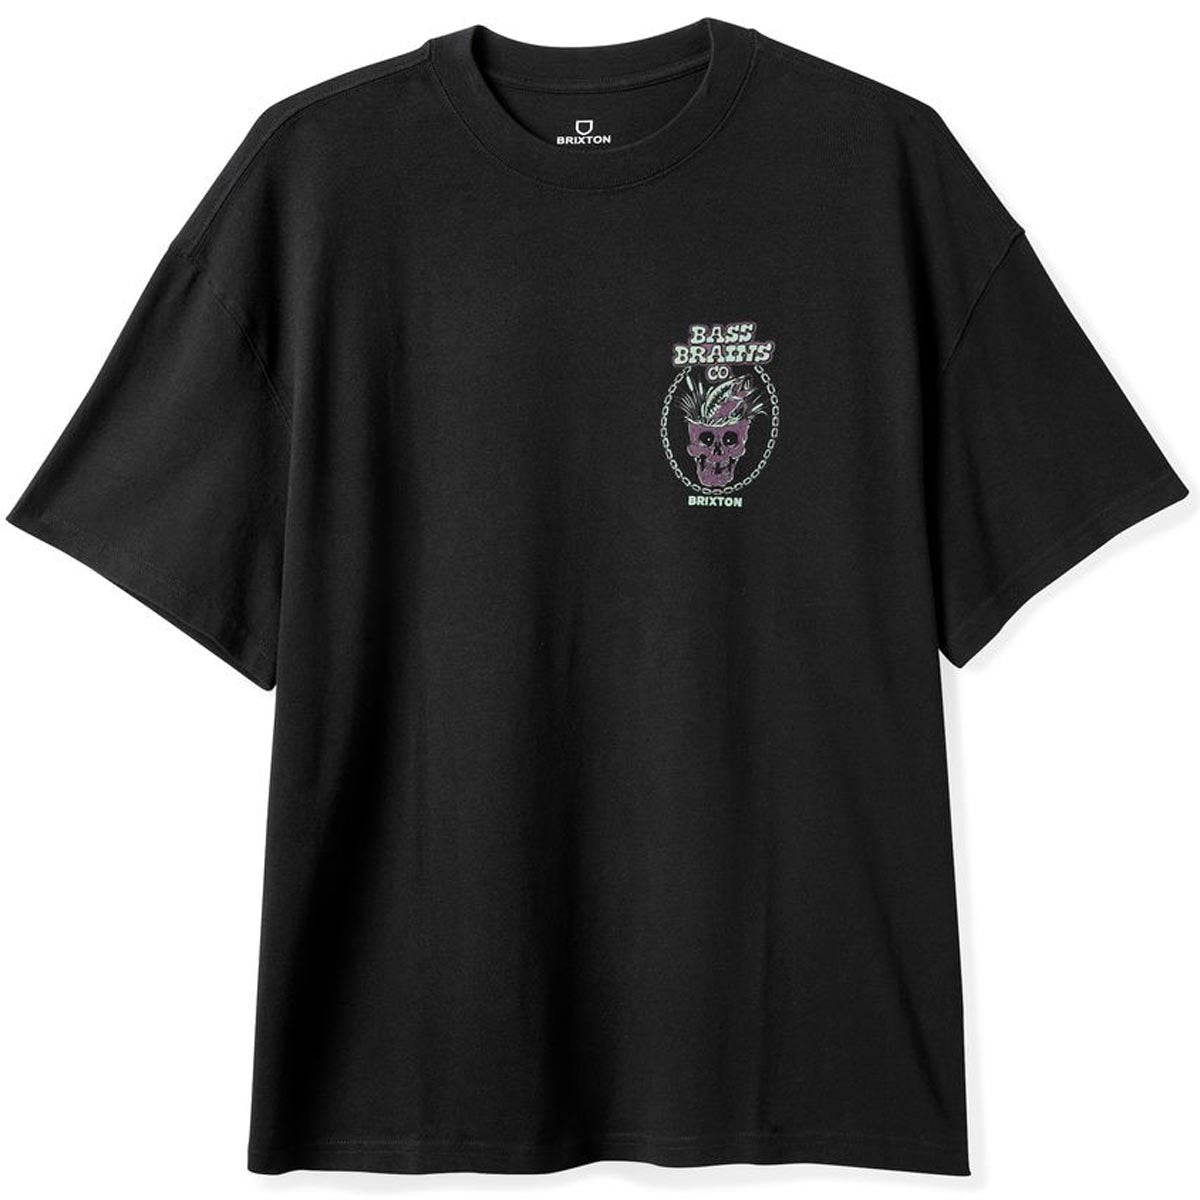 Brixton Bass Brains Skull T-Shirt - Black image 2